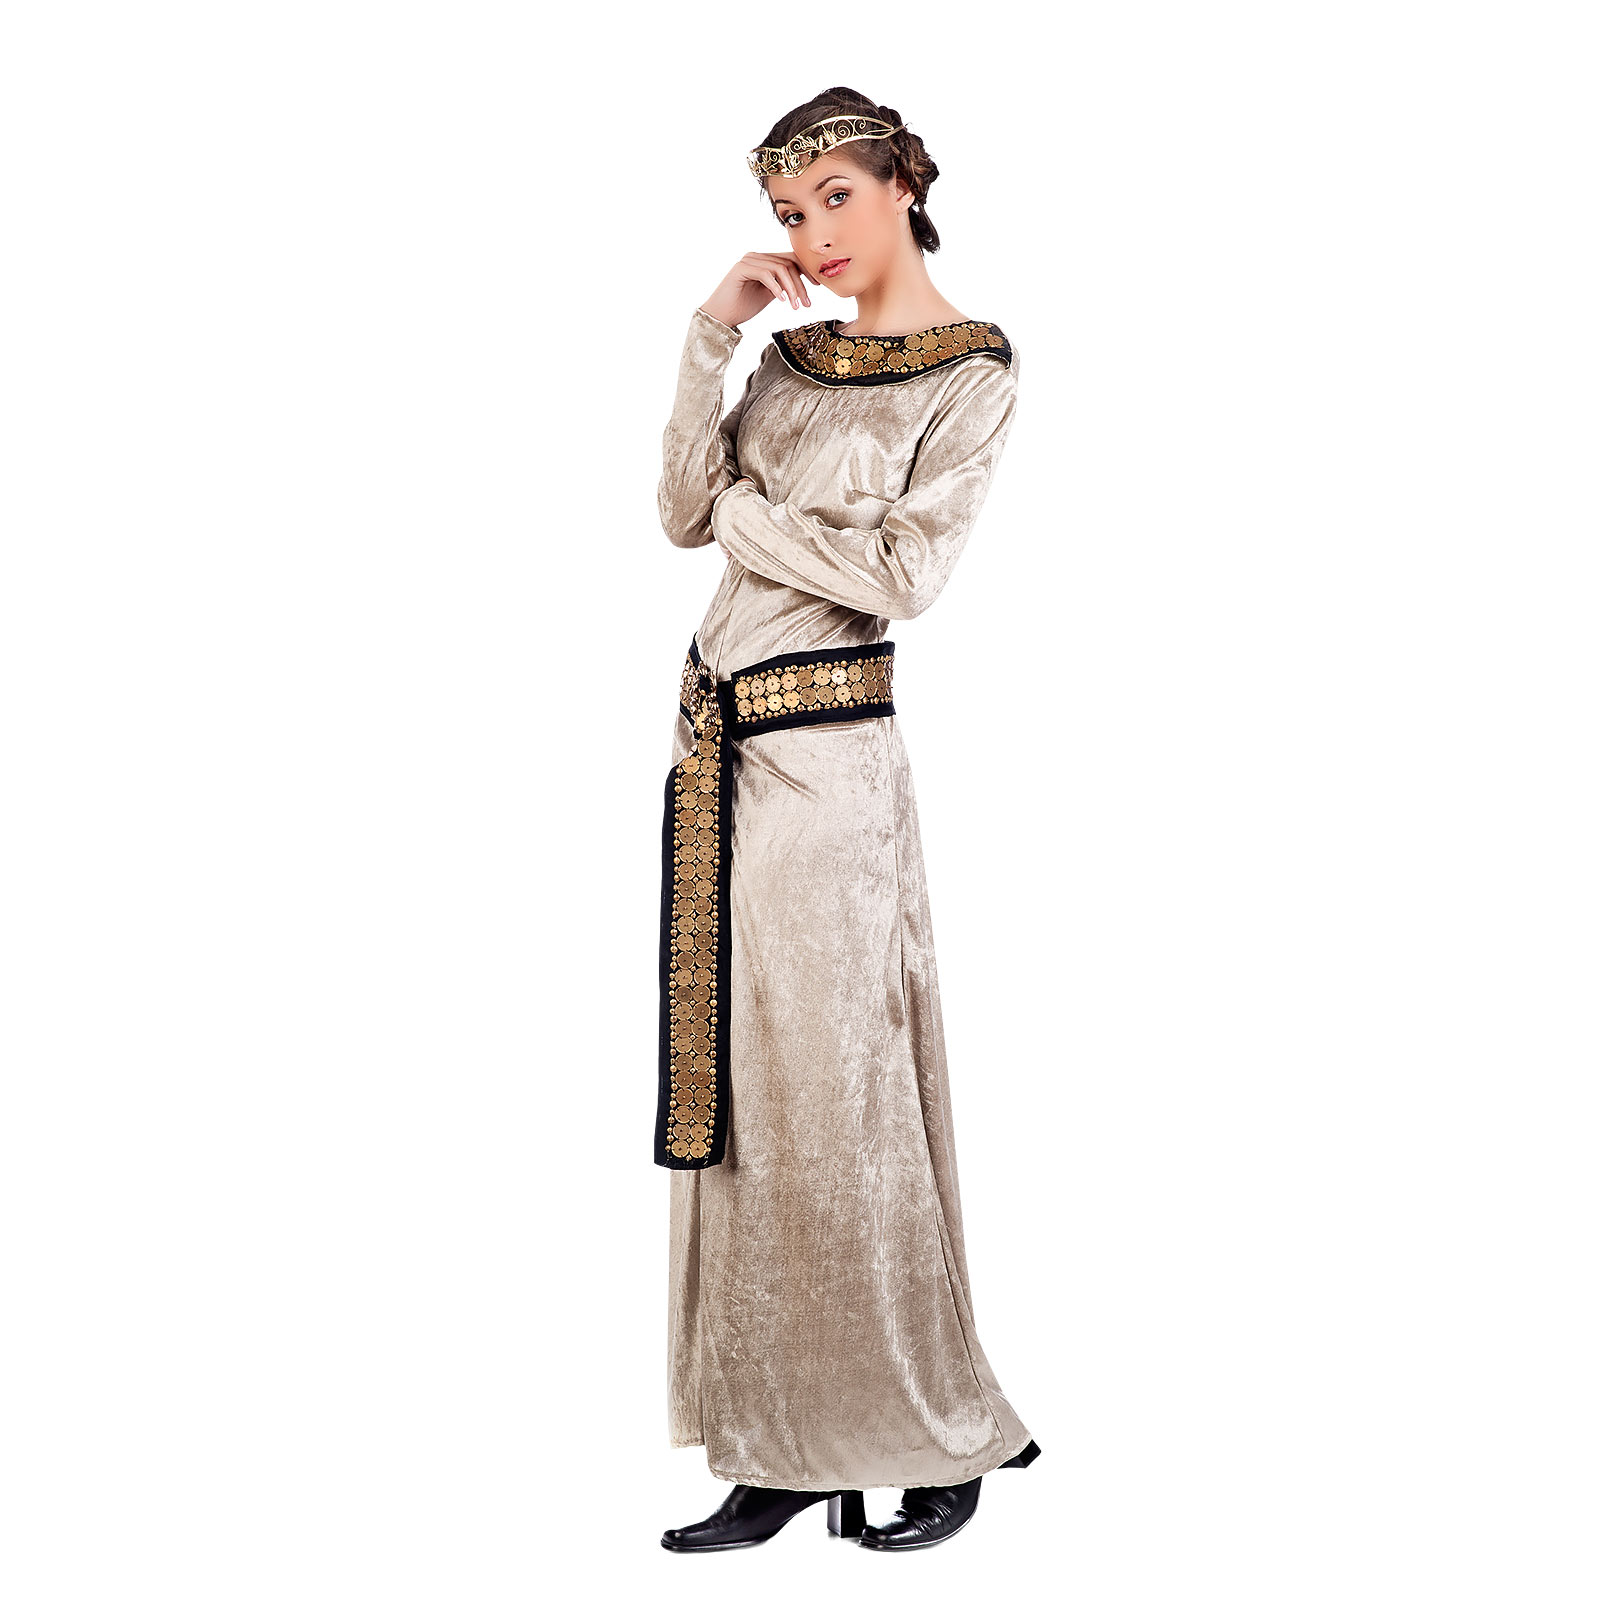 Middeleeuwse Prinses - Kostuum